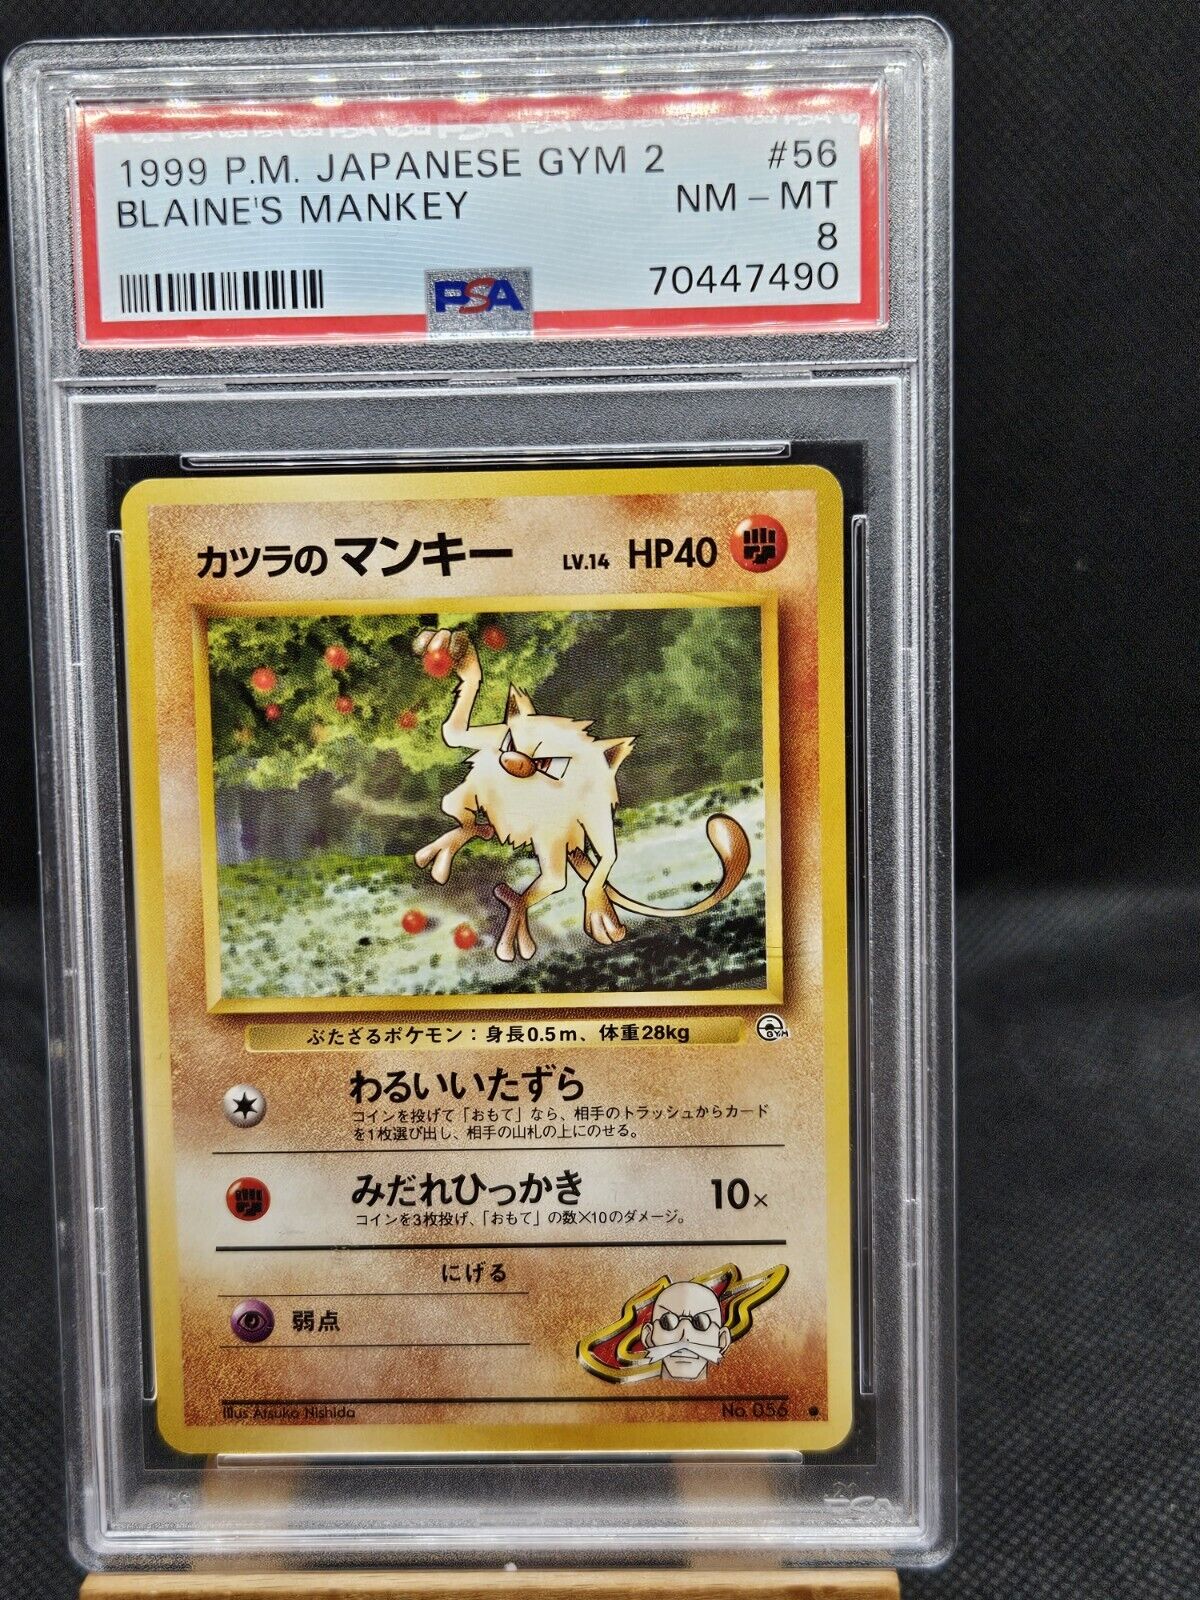 Blaines Mankey 56 Japanese Gym 2 Pokemon Trading Card PSA Grade 8